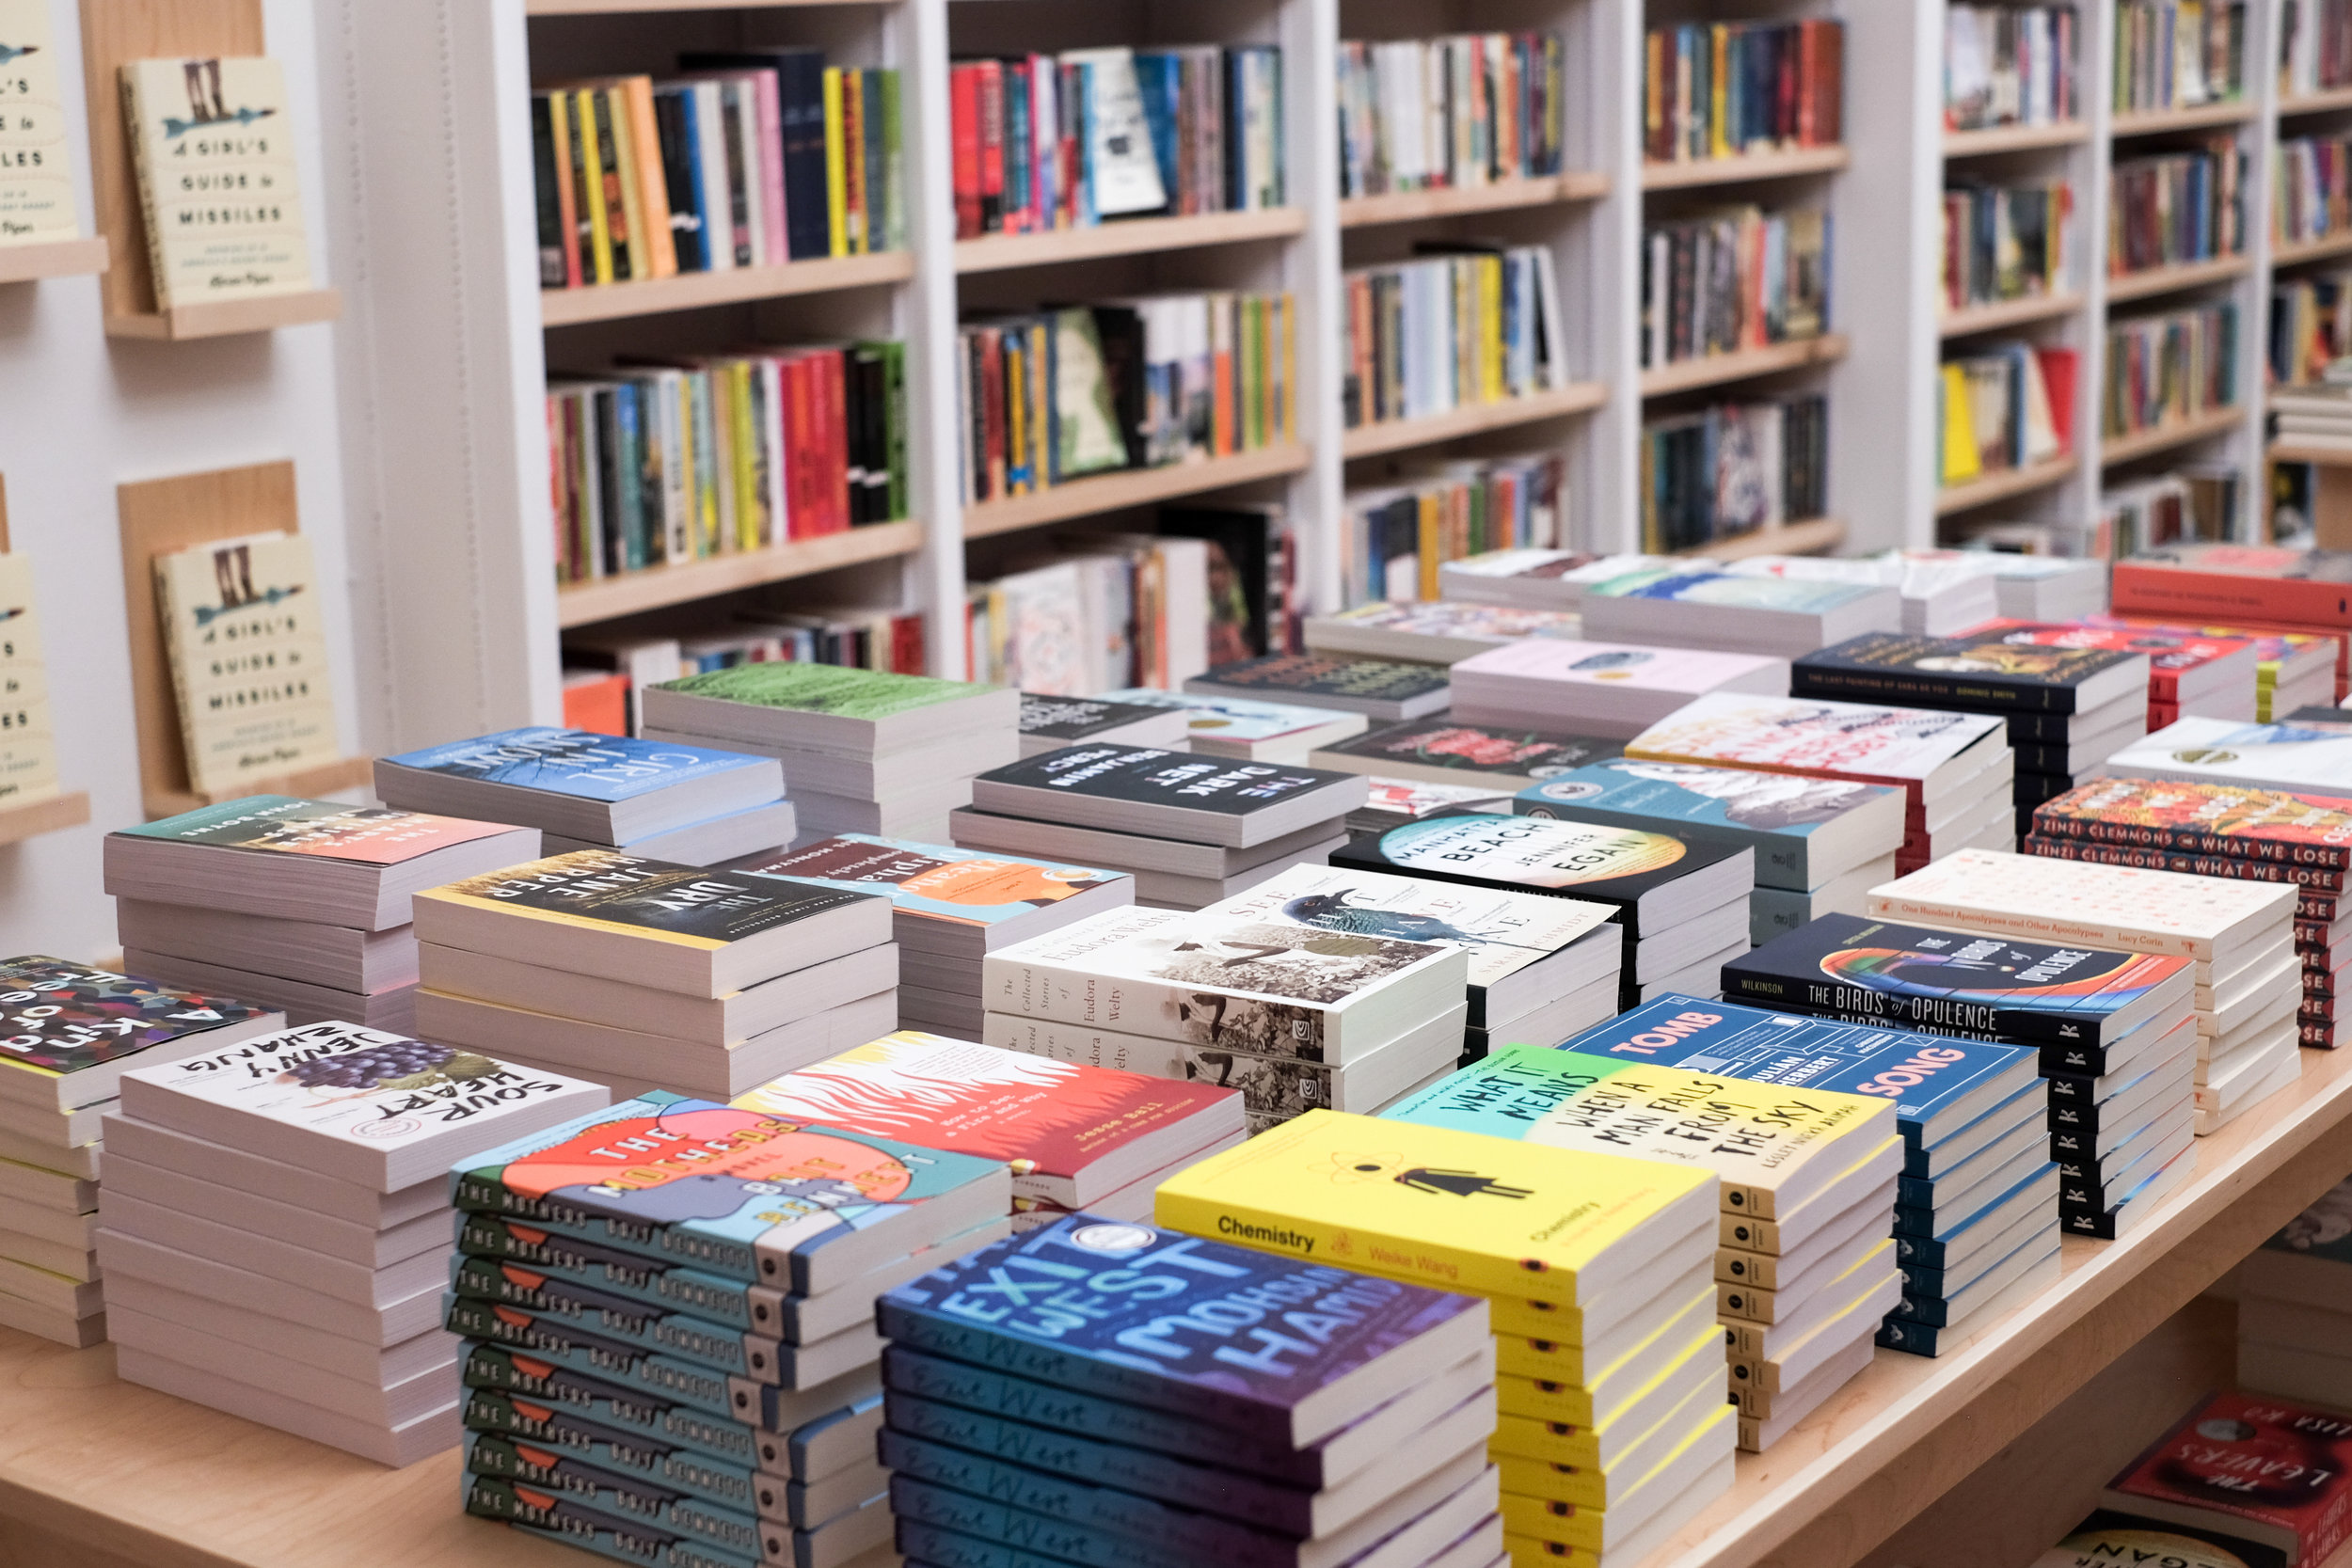 Like shop book. Bookshop. Bookshop картинка. Книжный магазин бук шоп. Bookshop (bookstore).